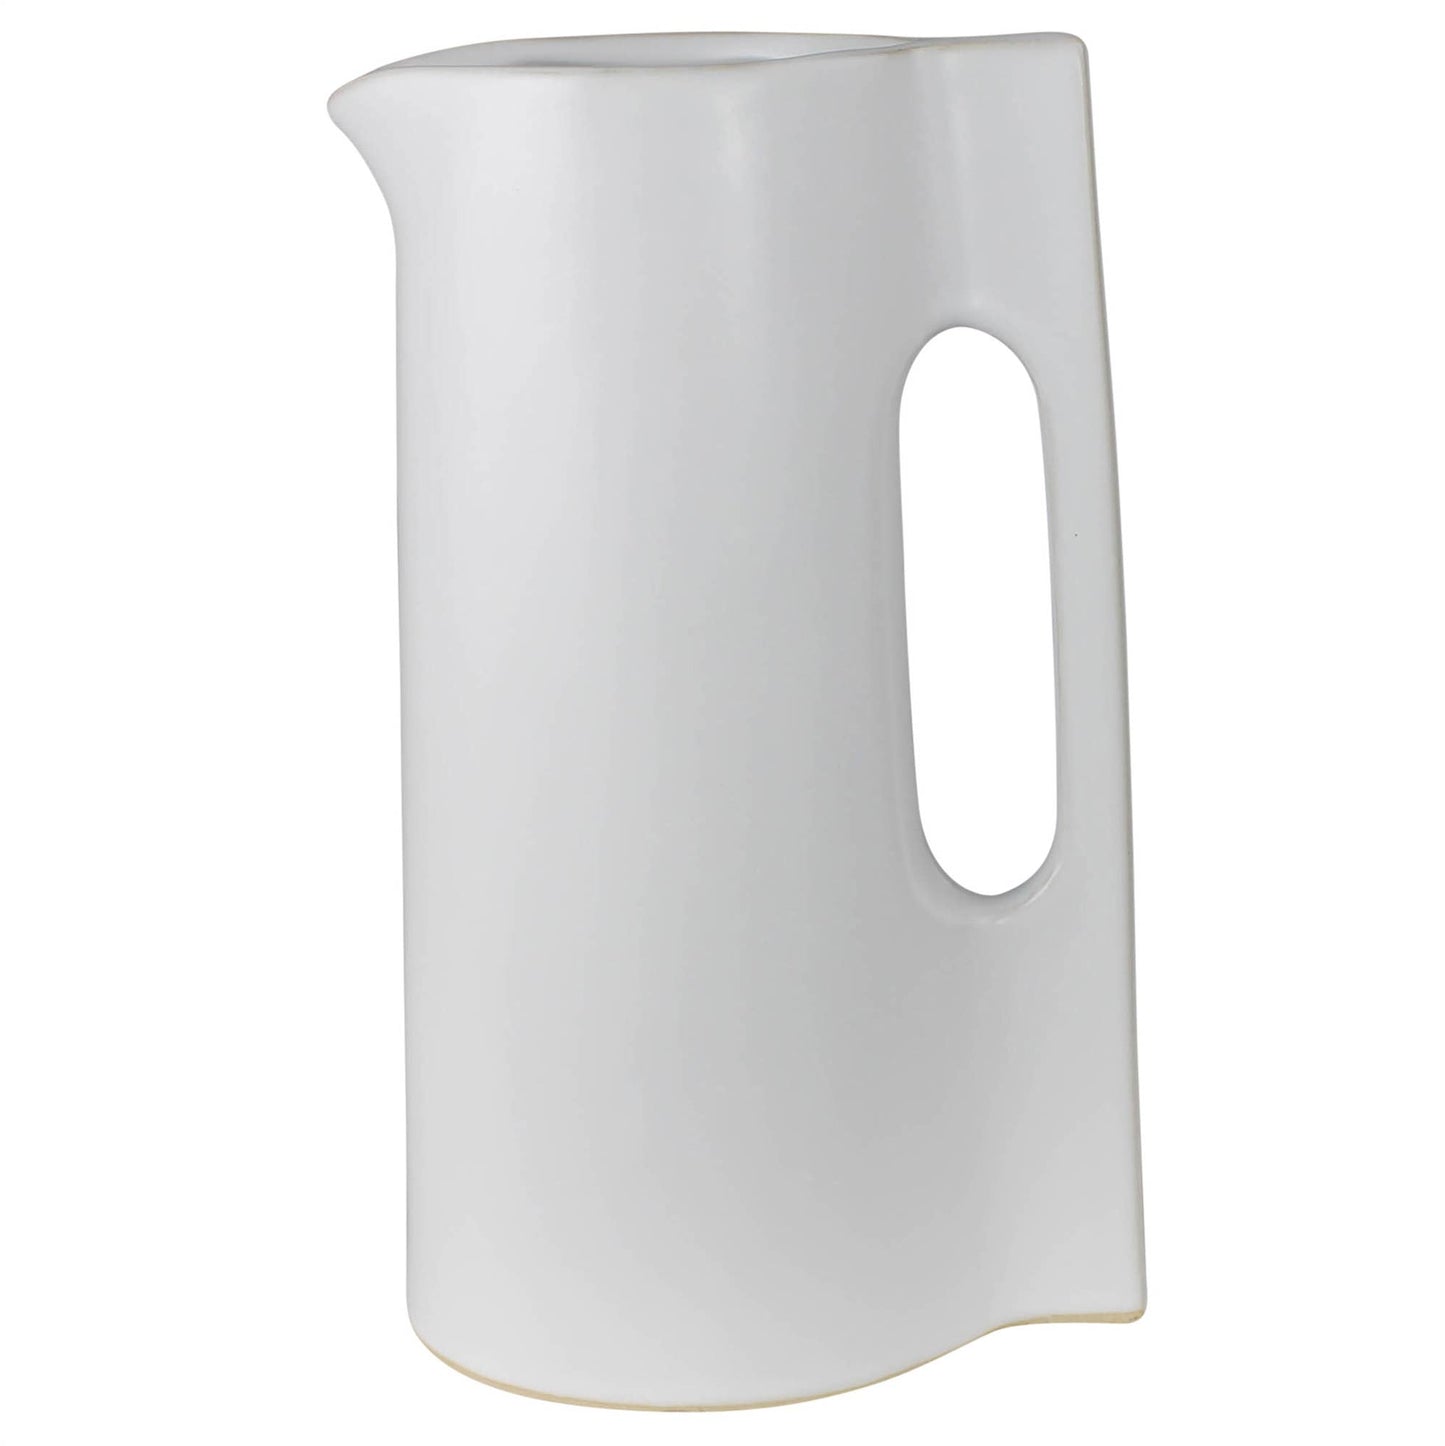 Issa Ceramic Pitcher/Vase